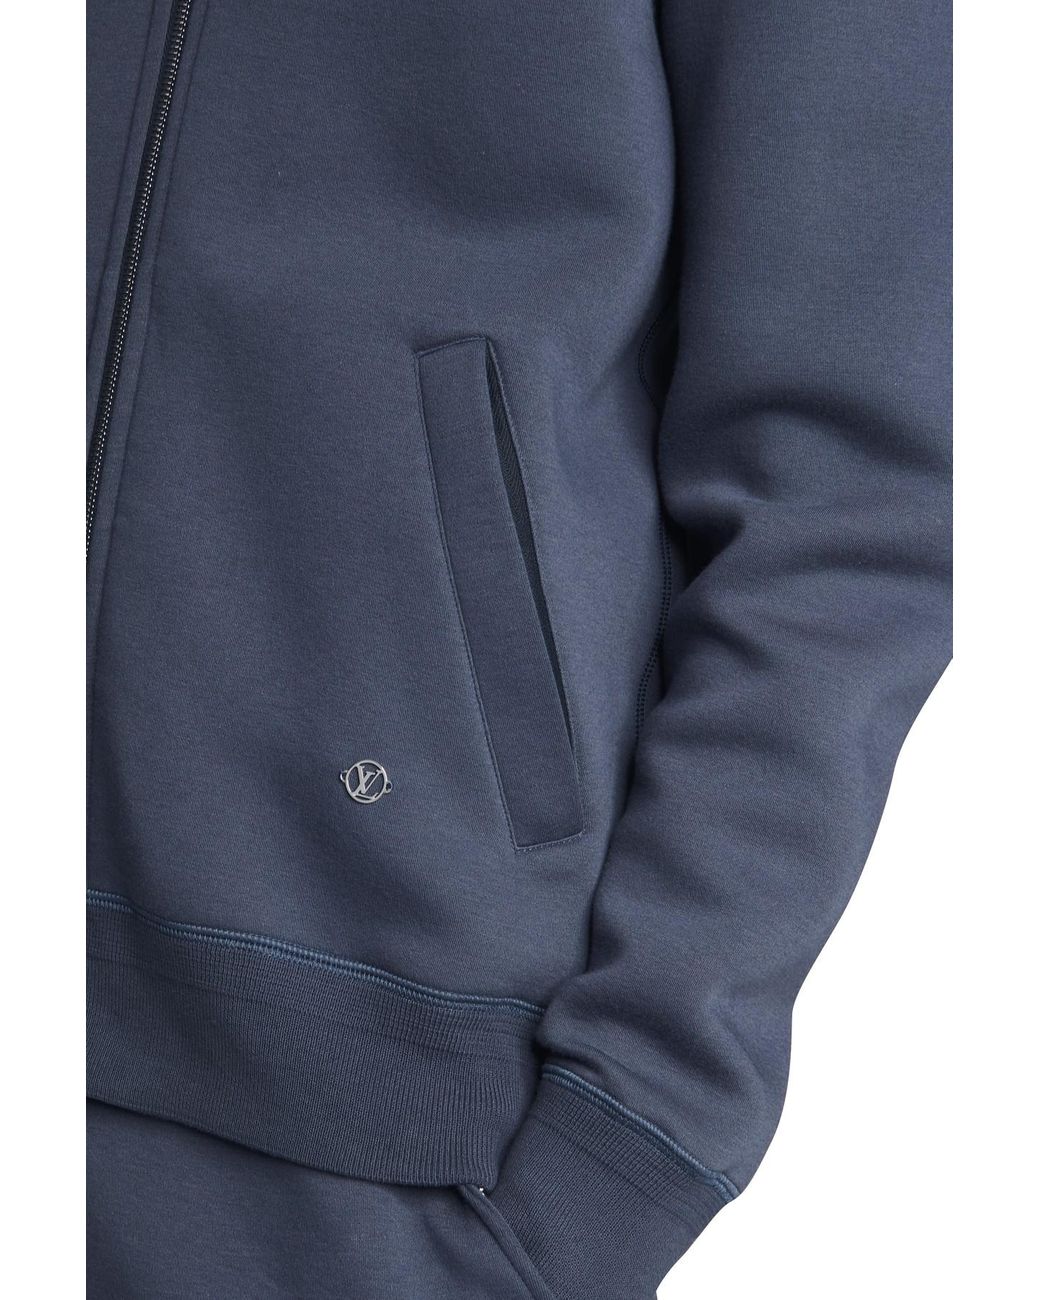 Louis Vuitton sleeveless Vest Zip Hoodie